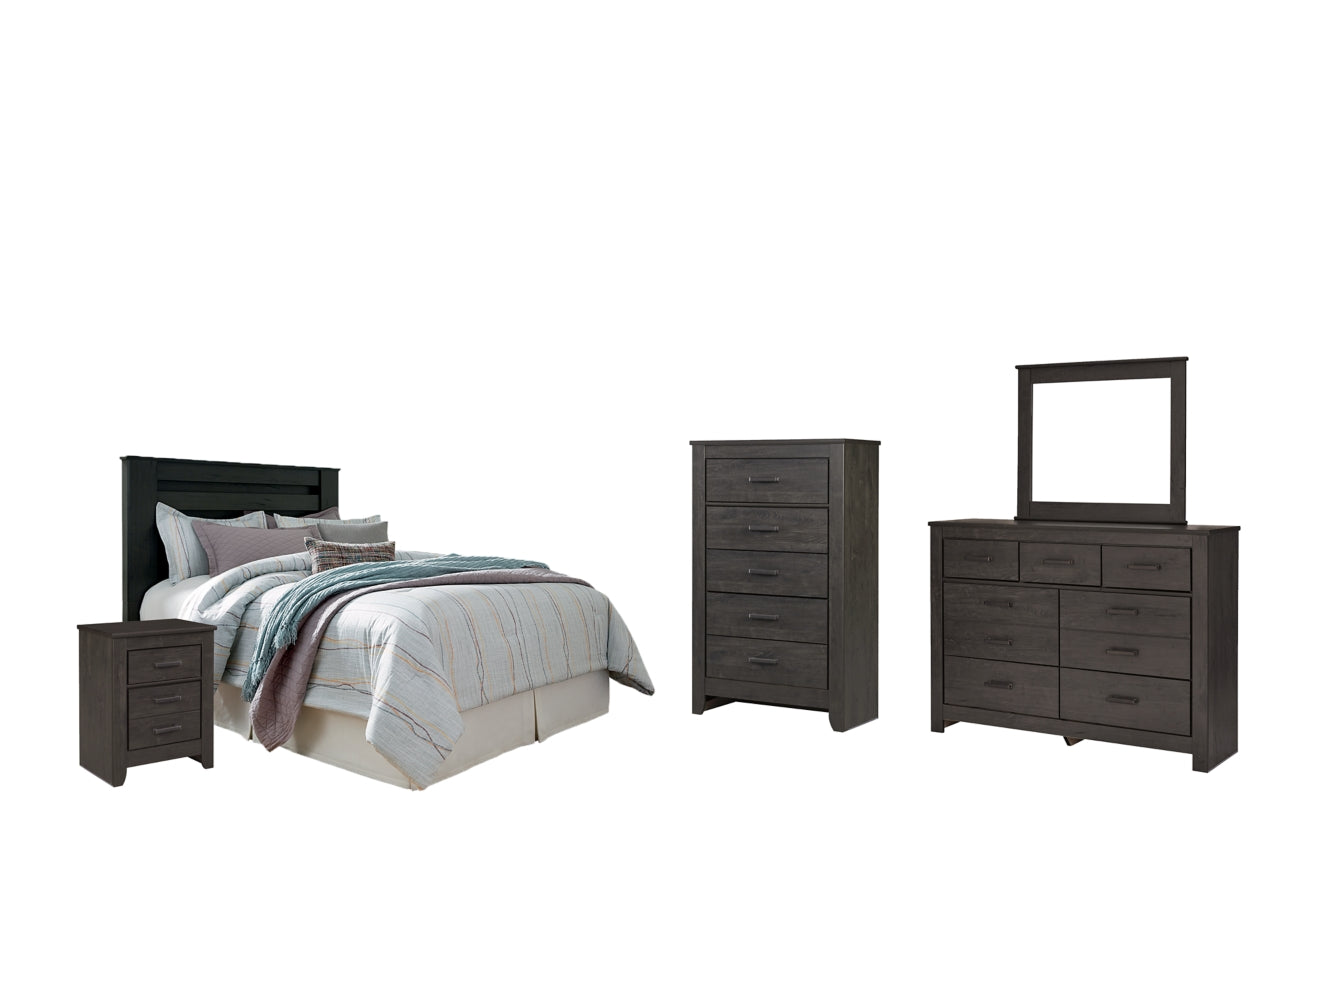 Brinxton Bedroom Sets - furniture place usa